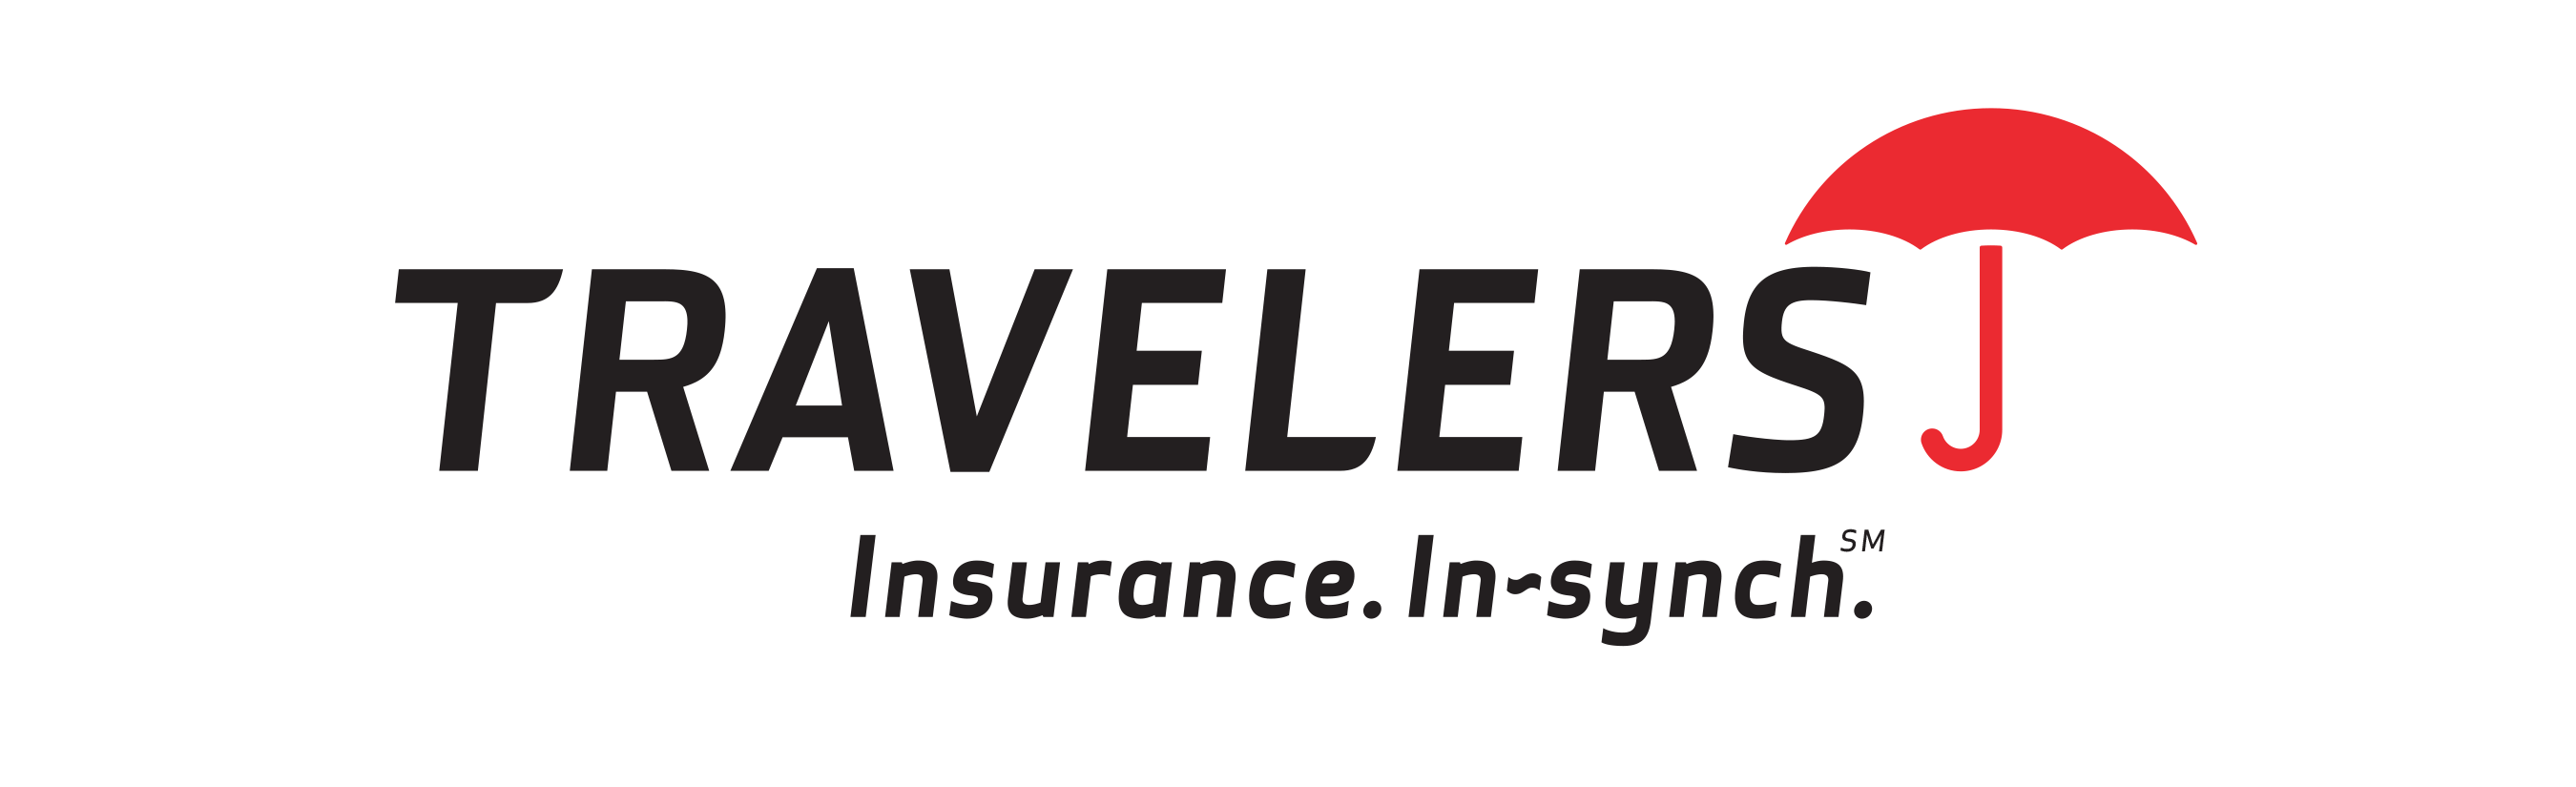 Travelers insurance Logos